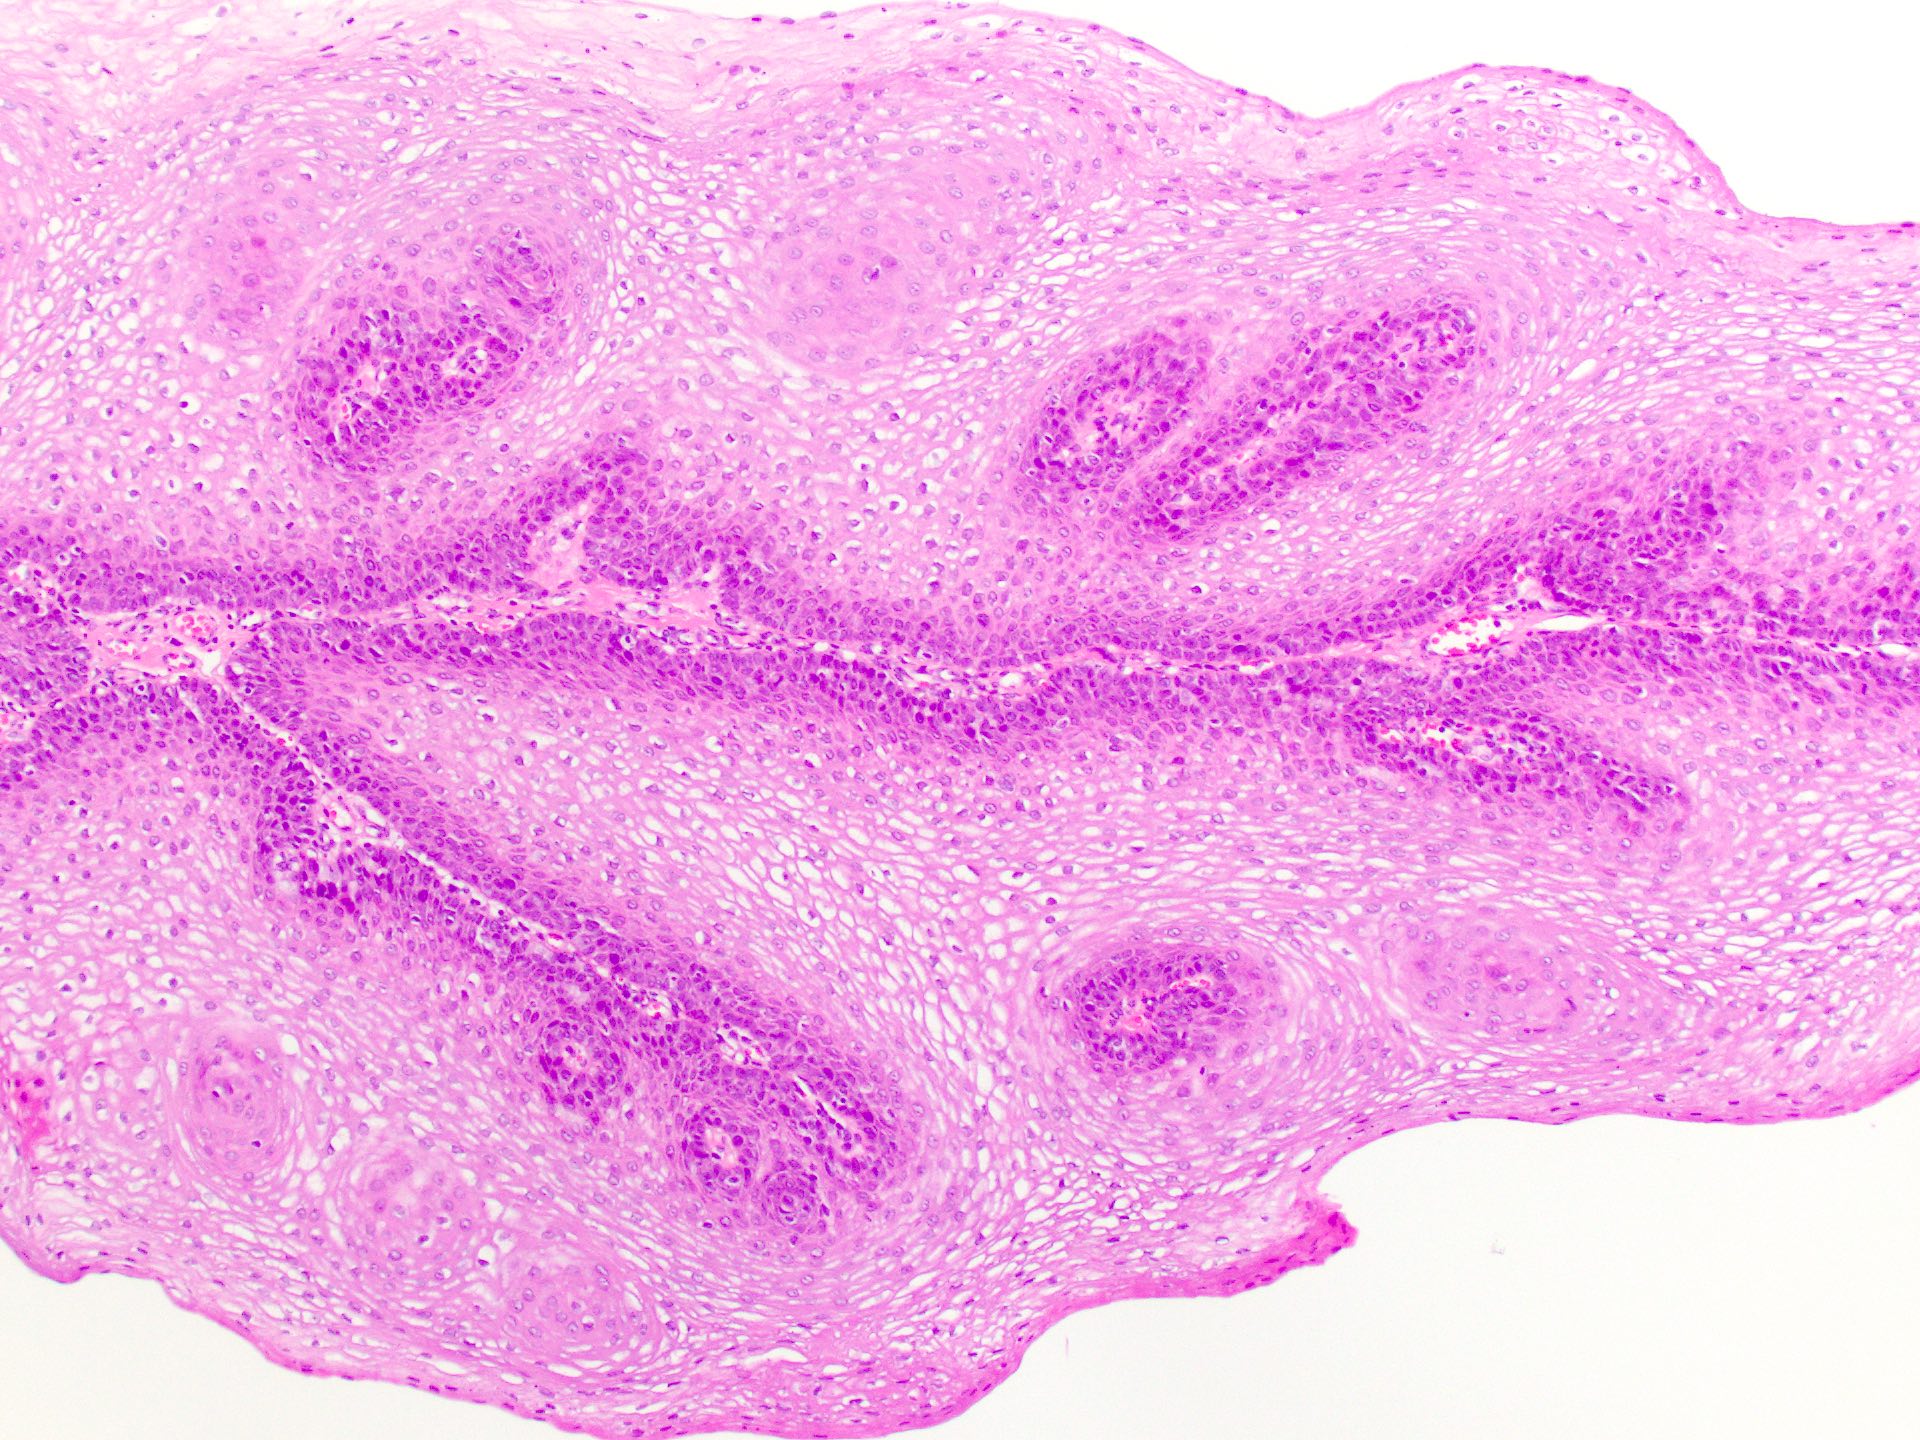 papilloma esophagus pathology outlines origine hpv papillomavirus